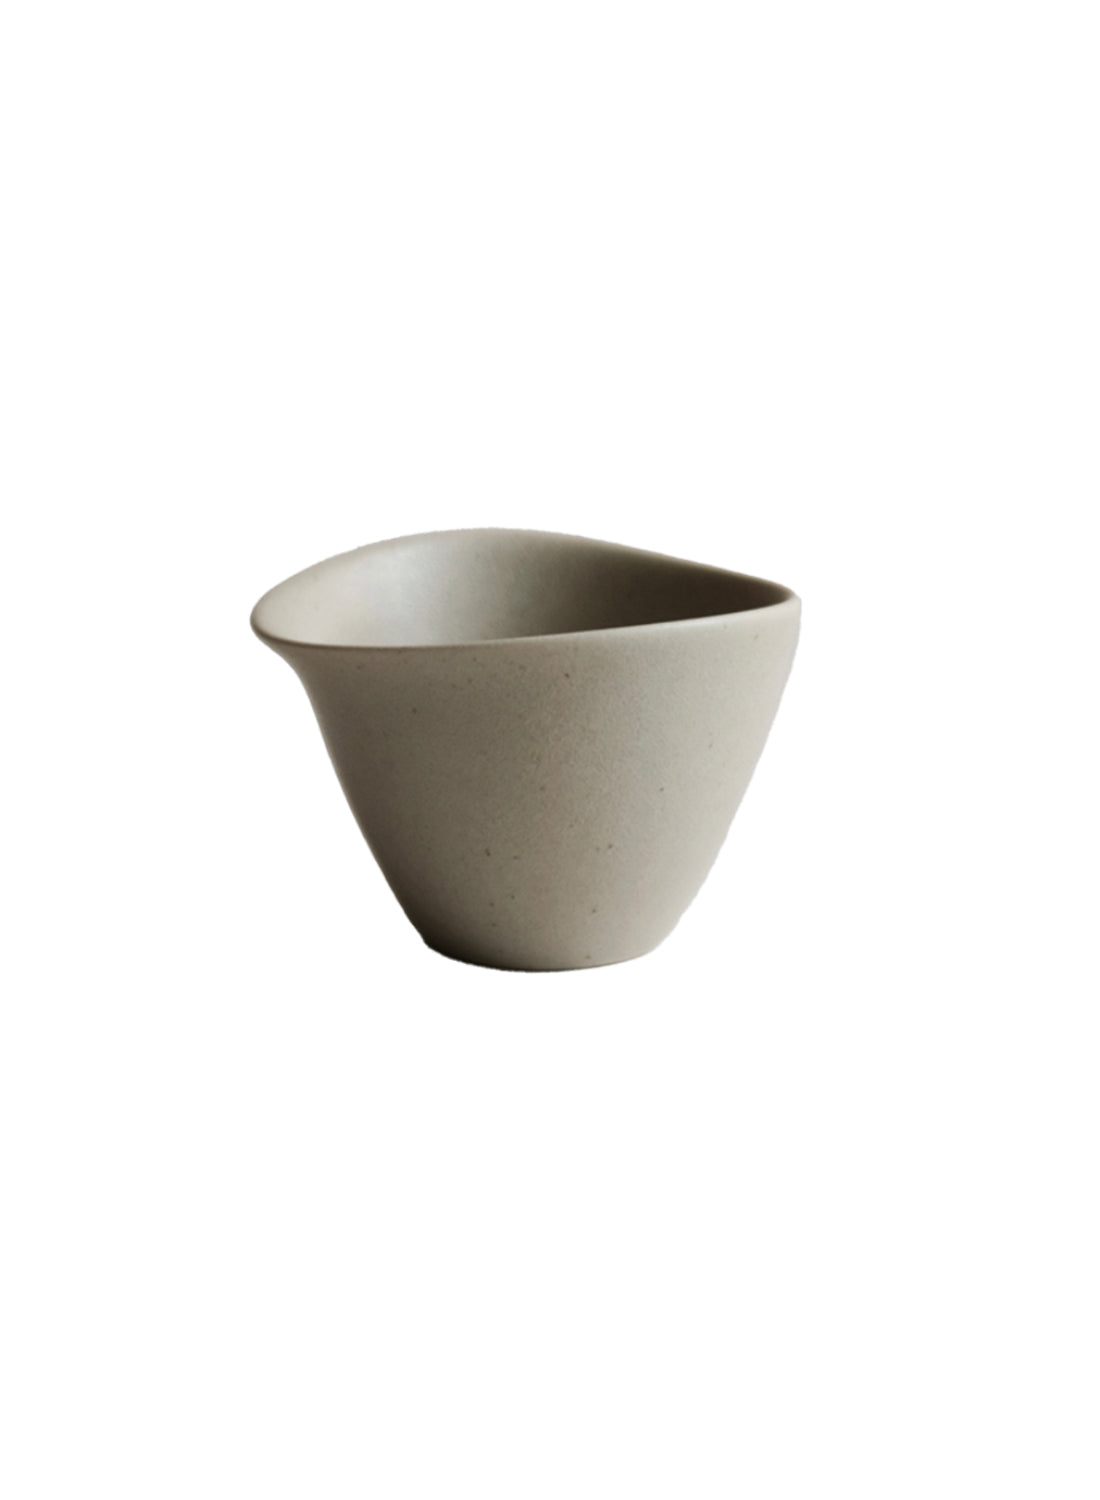 NR Ceramics Small Tea Cup, soil beige